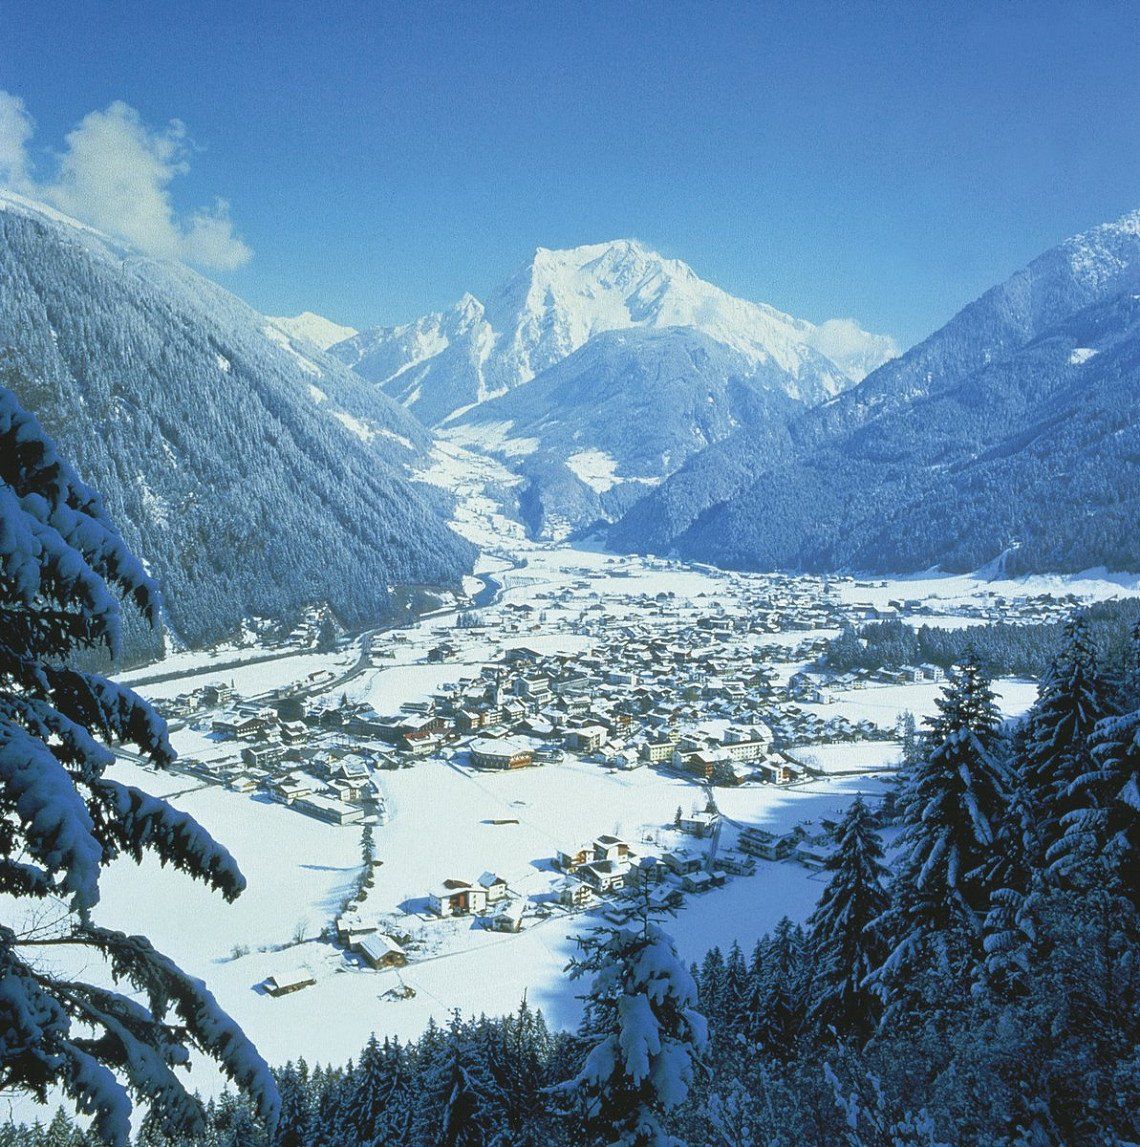 Austria Winter sports